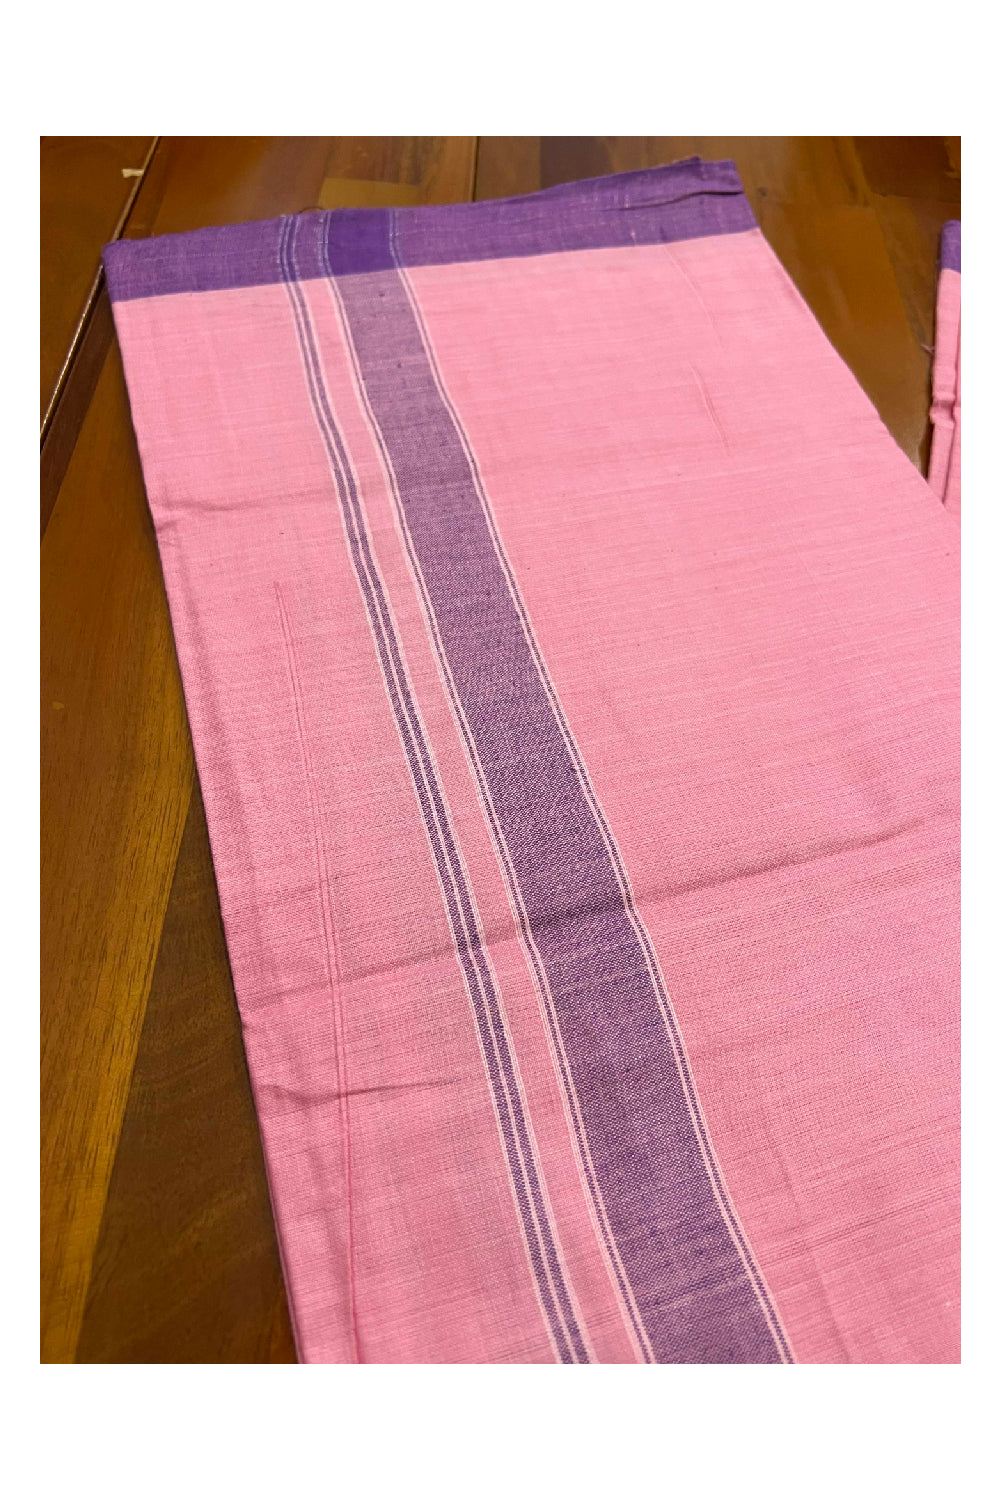 Southloom Premium Handloom Pink Single Mundu with Violet Border (Lungi)